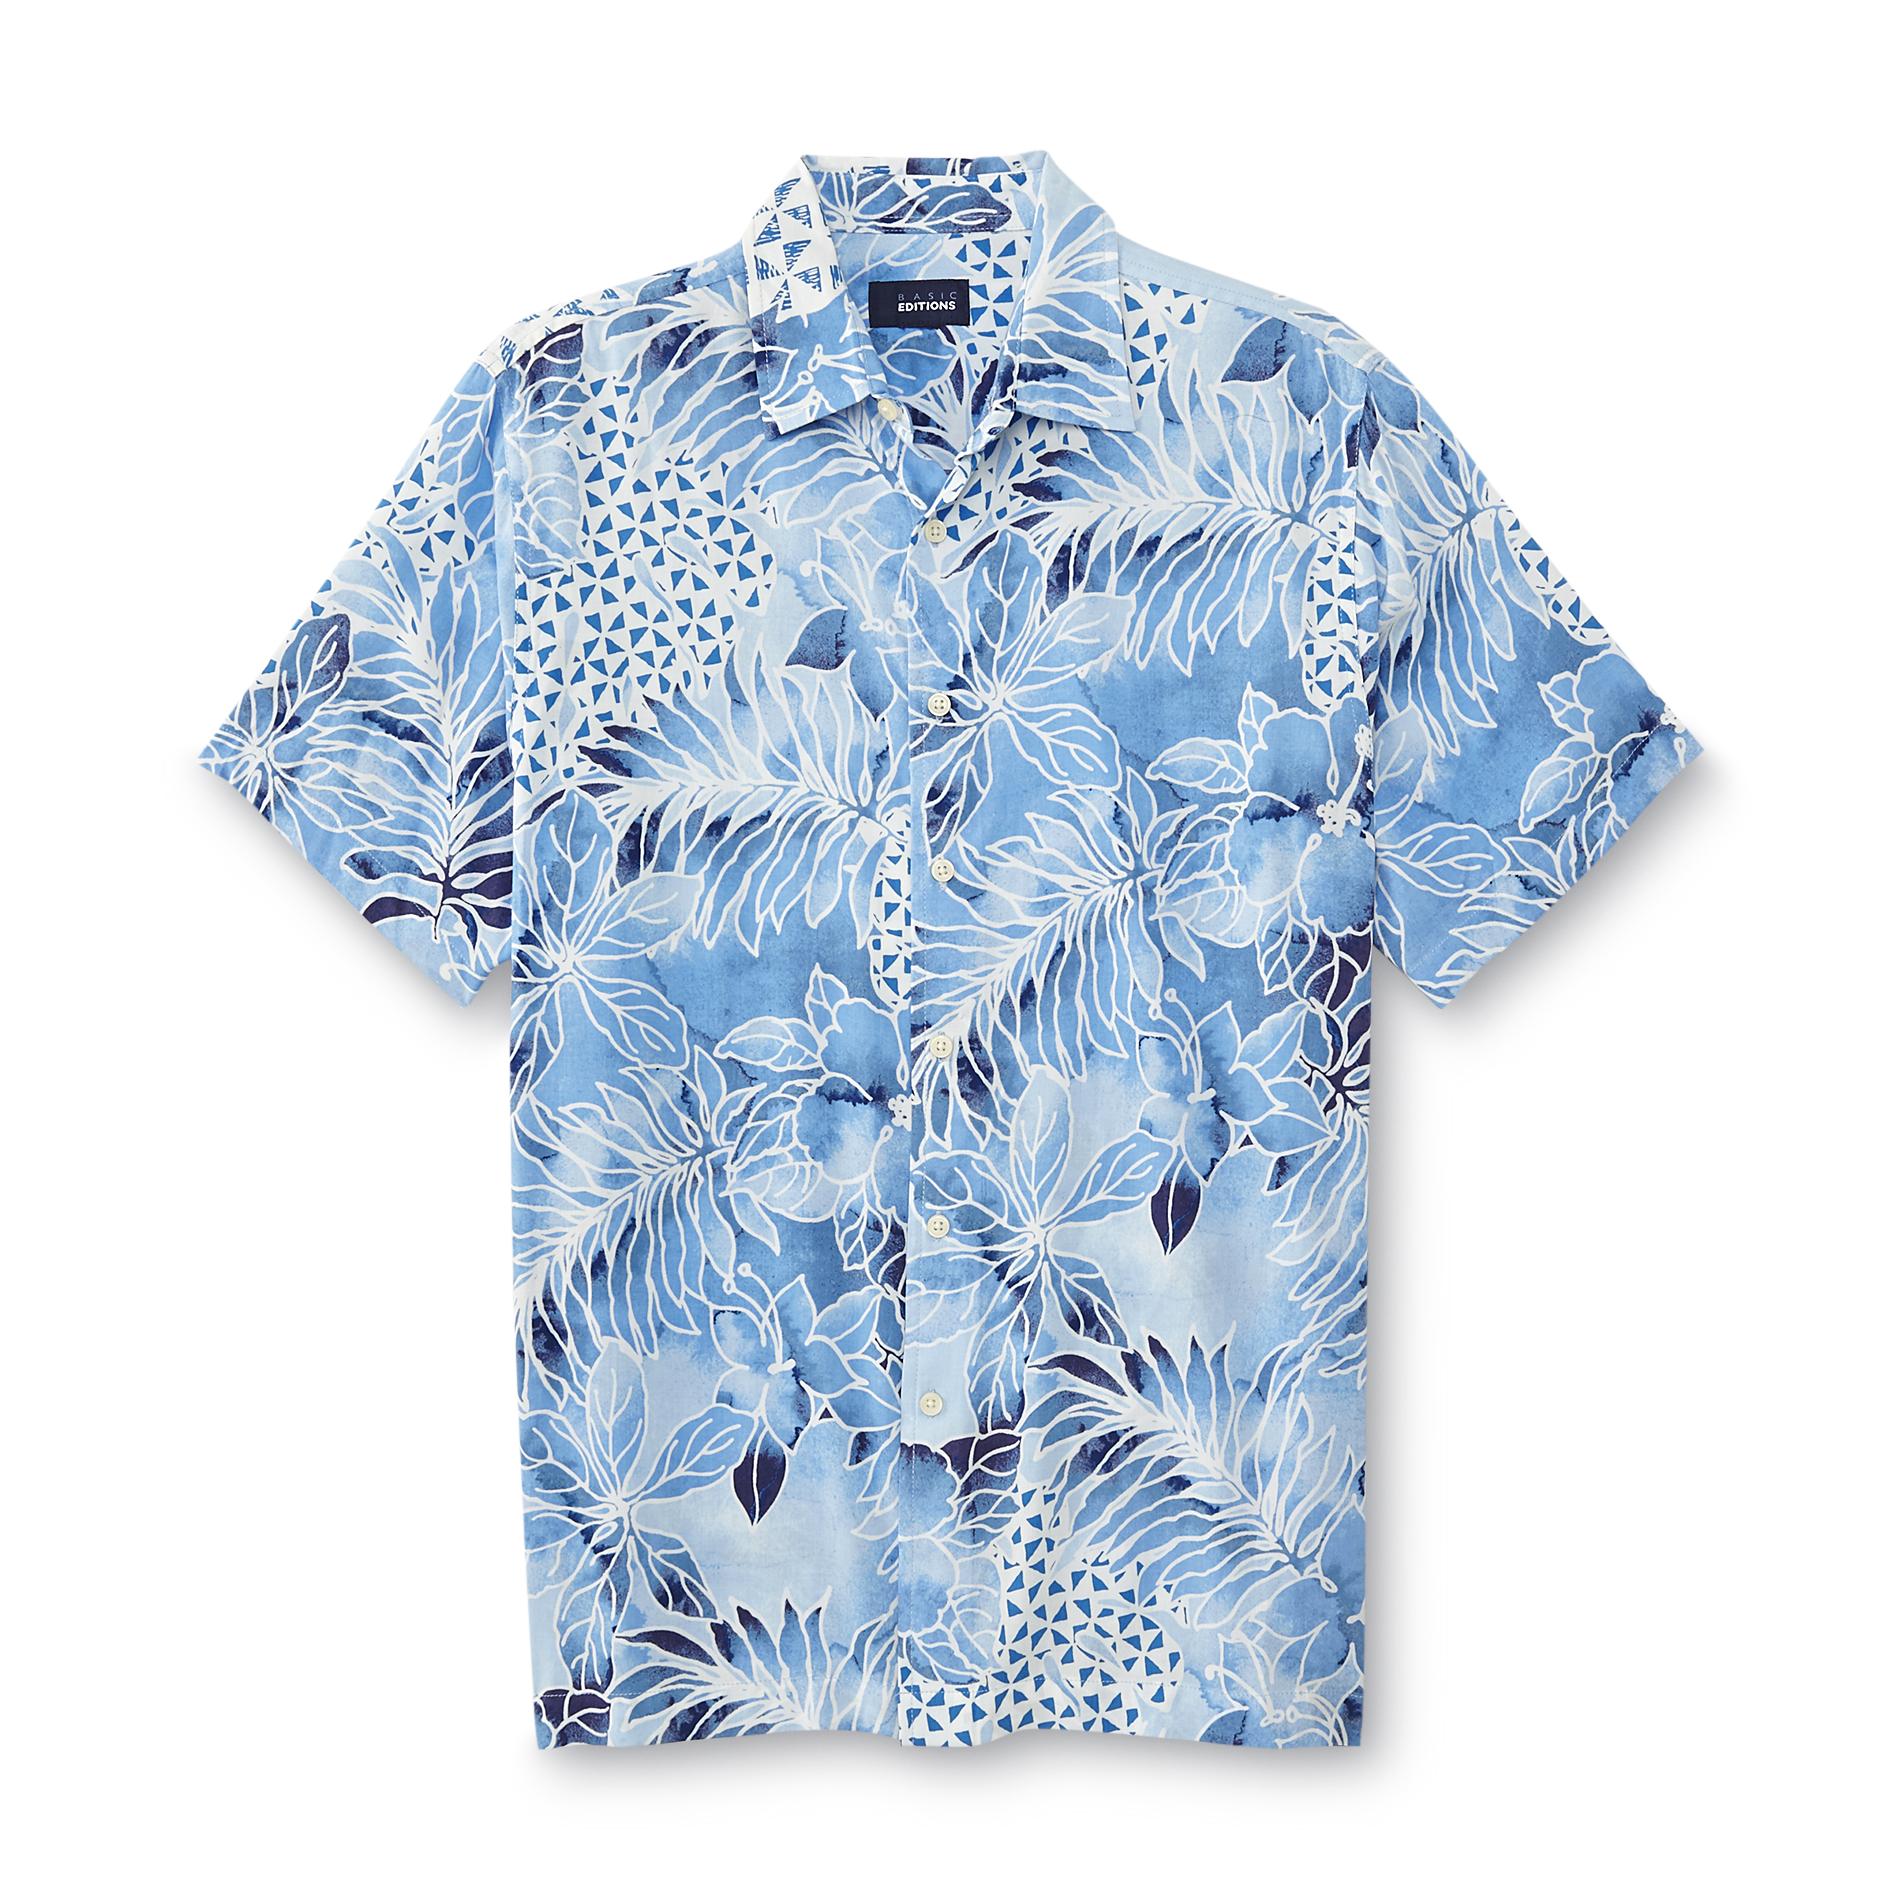 Basic Editions Men's Big & Tall Camp Shirt - Tropical